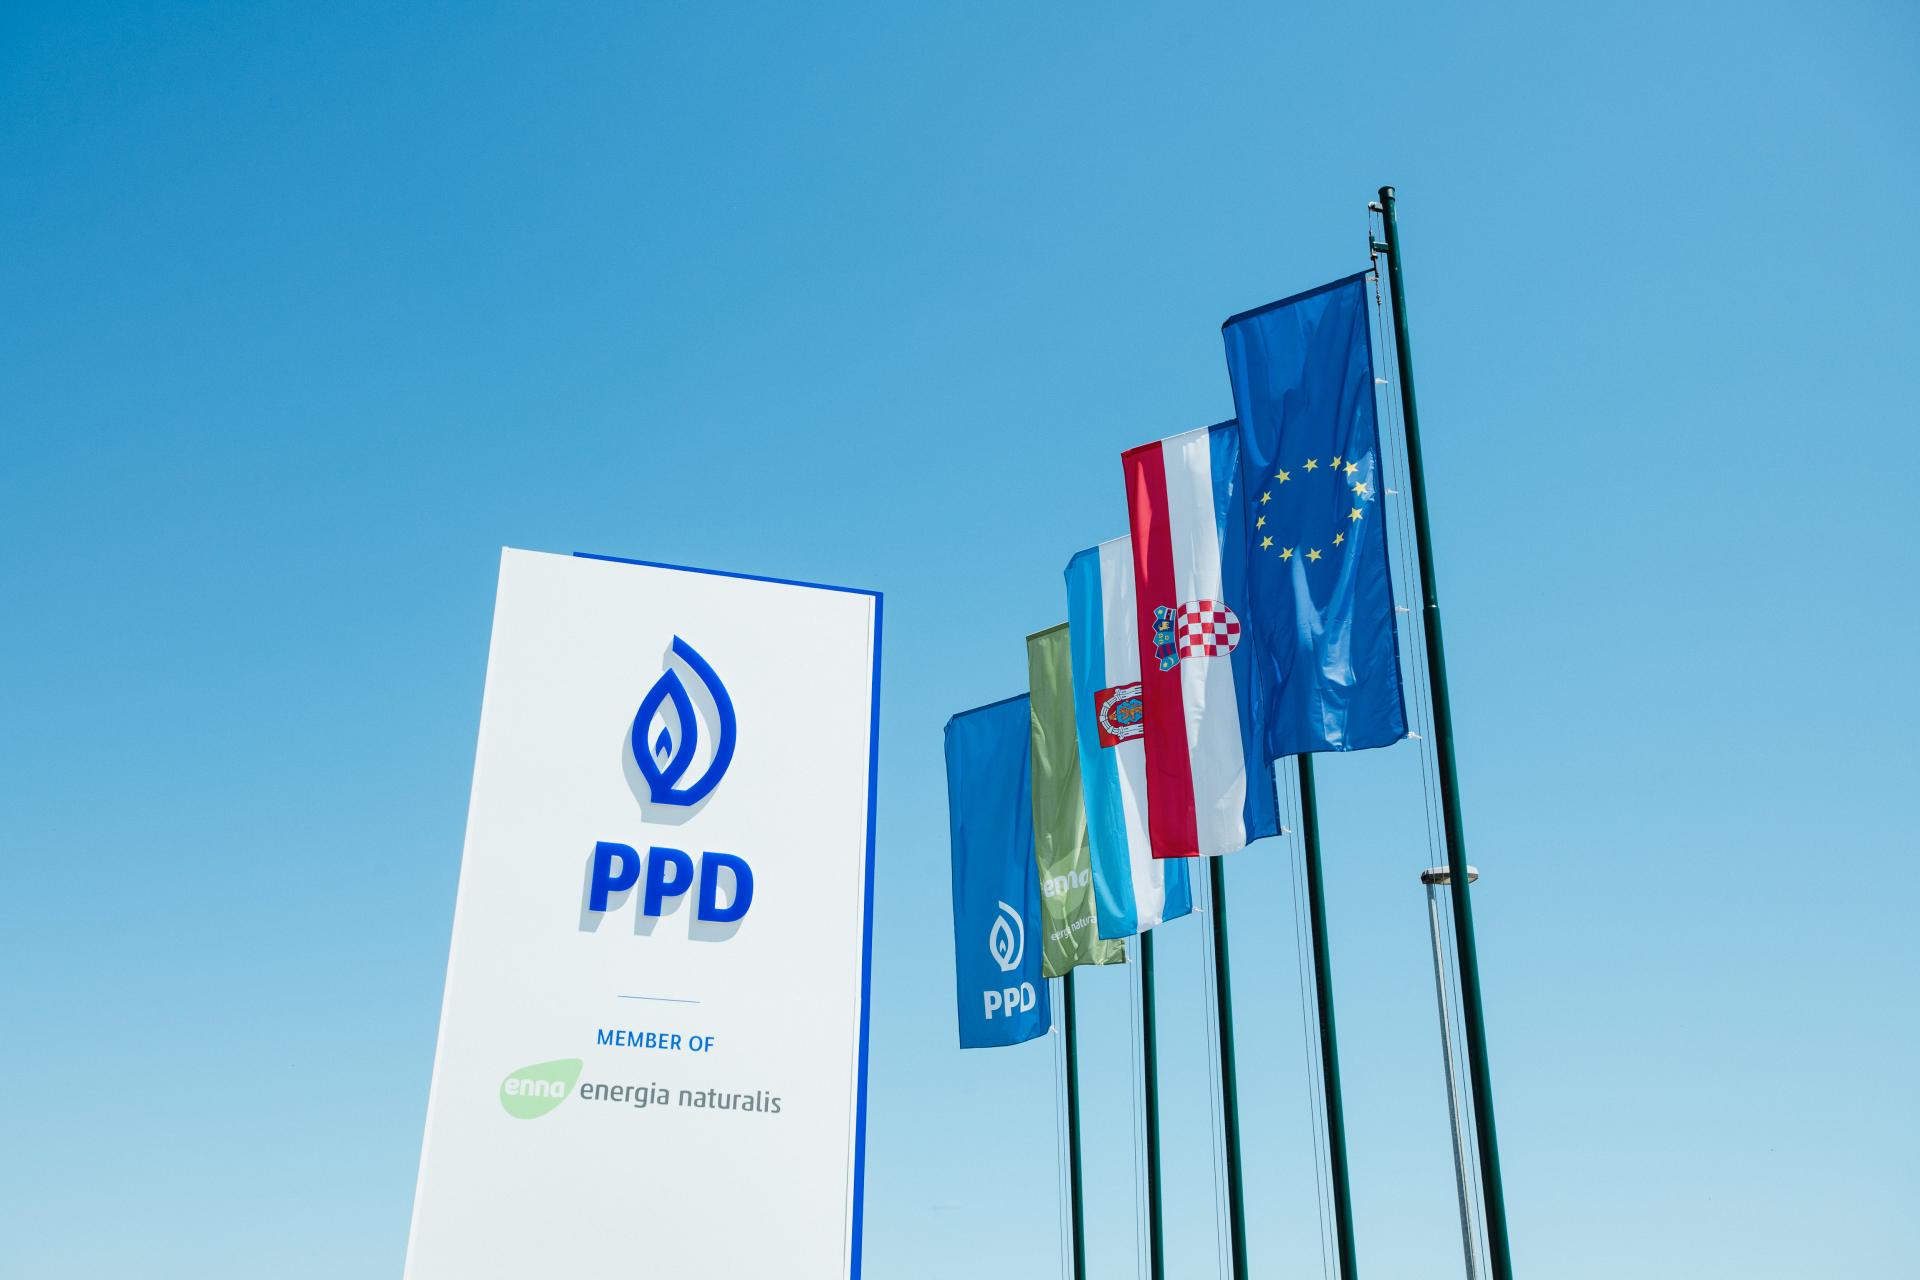 PPD: Petrokemija nije platila penale za nepreuzeti plin